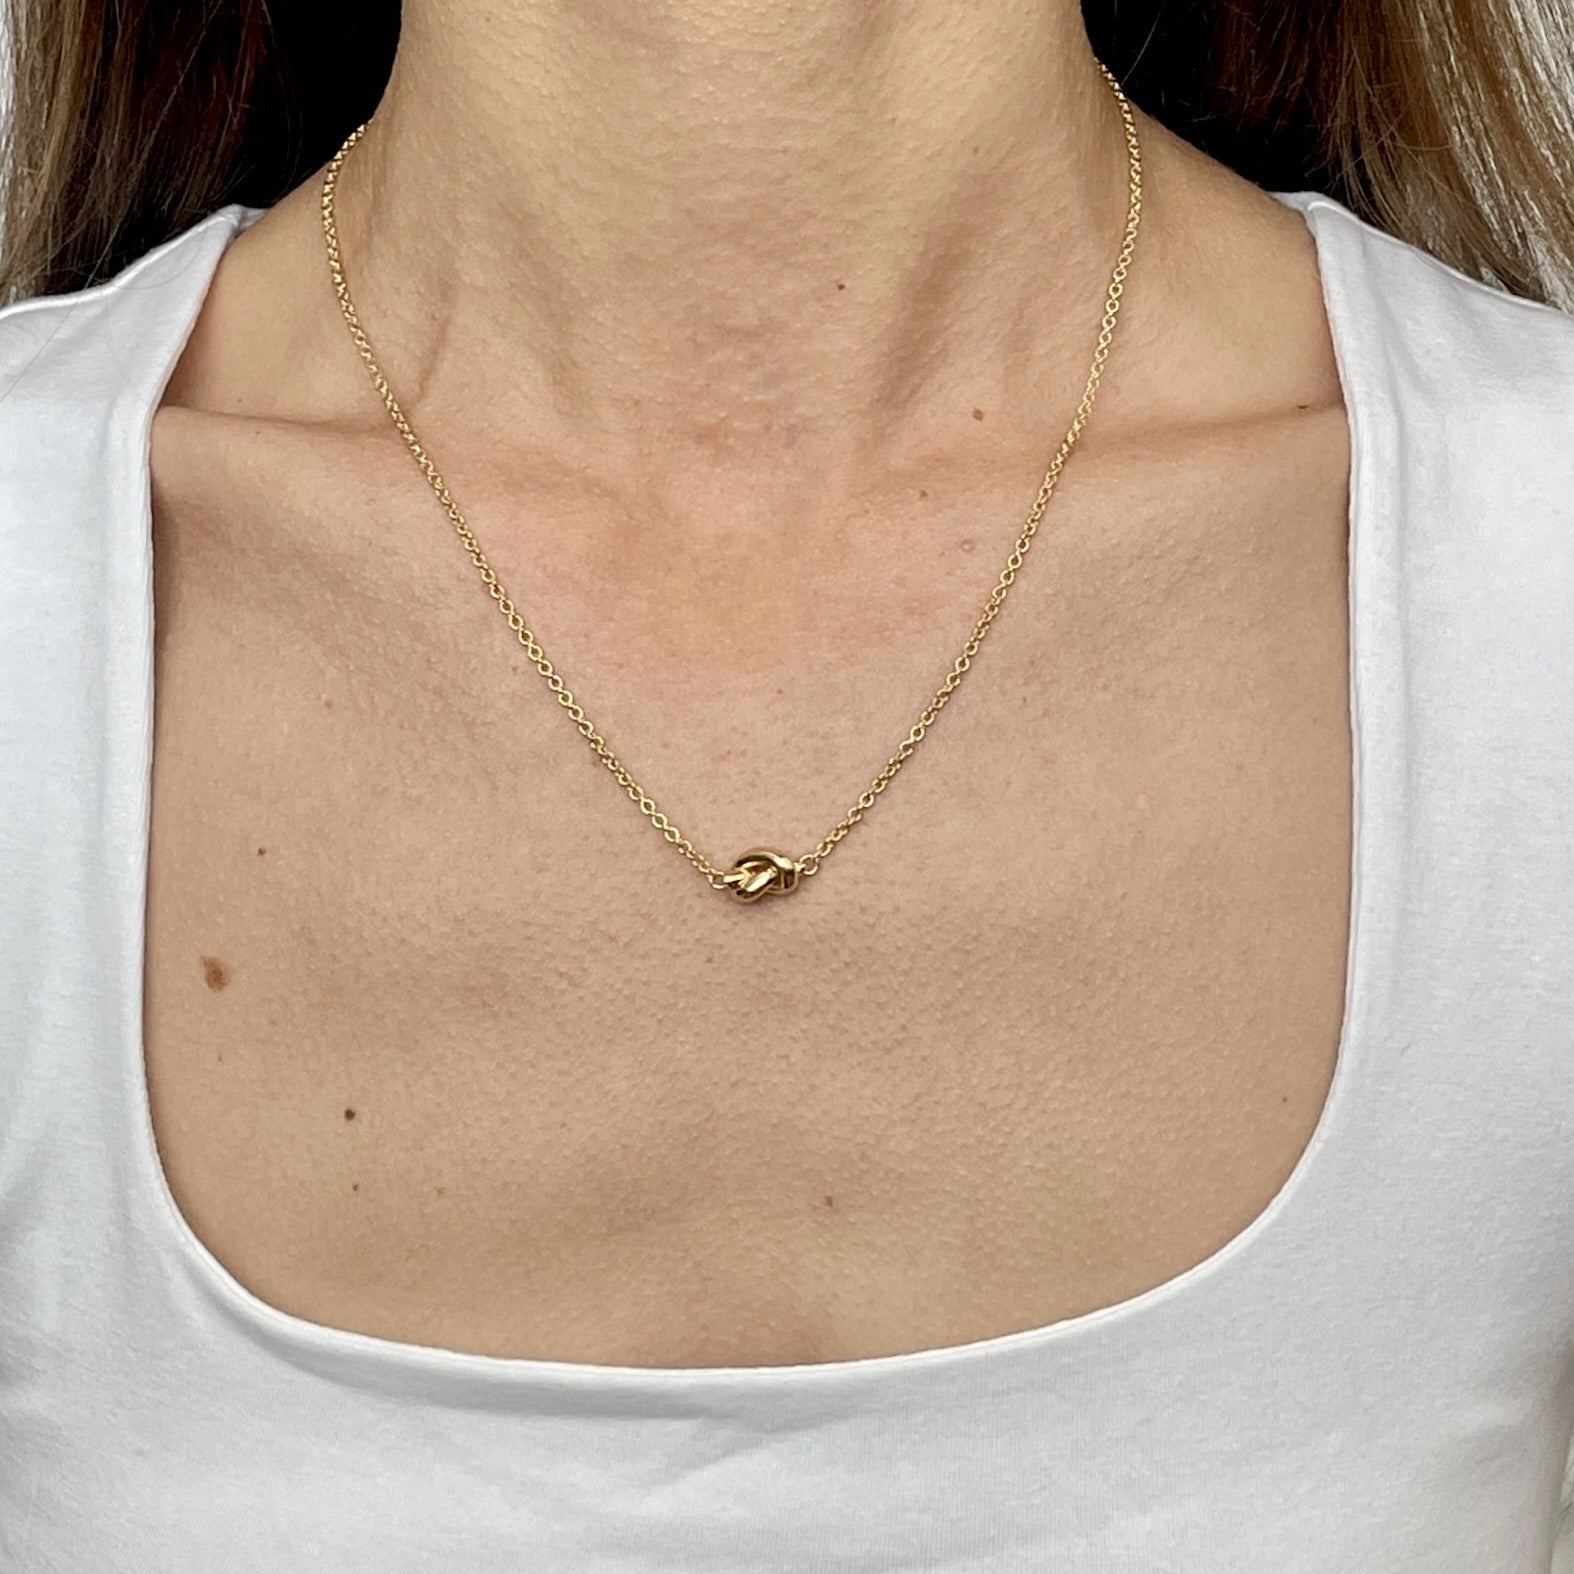 14K Gold Solitaire Love Knot Pendant Necklace